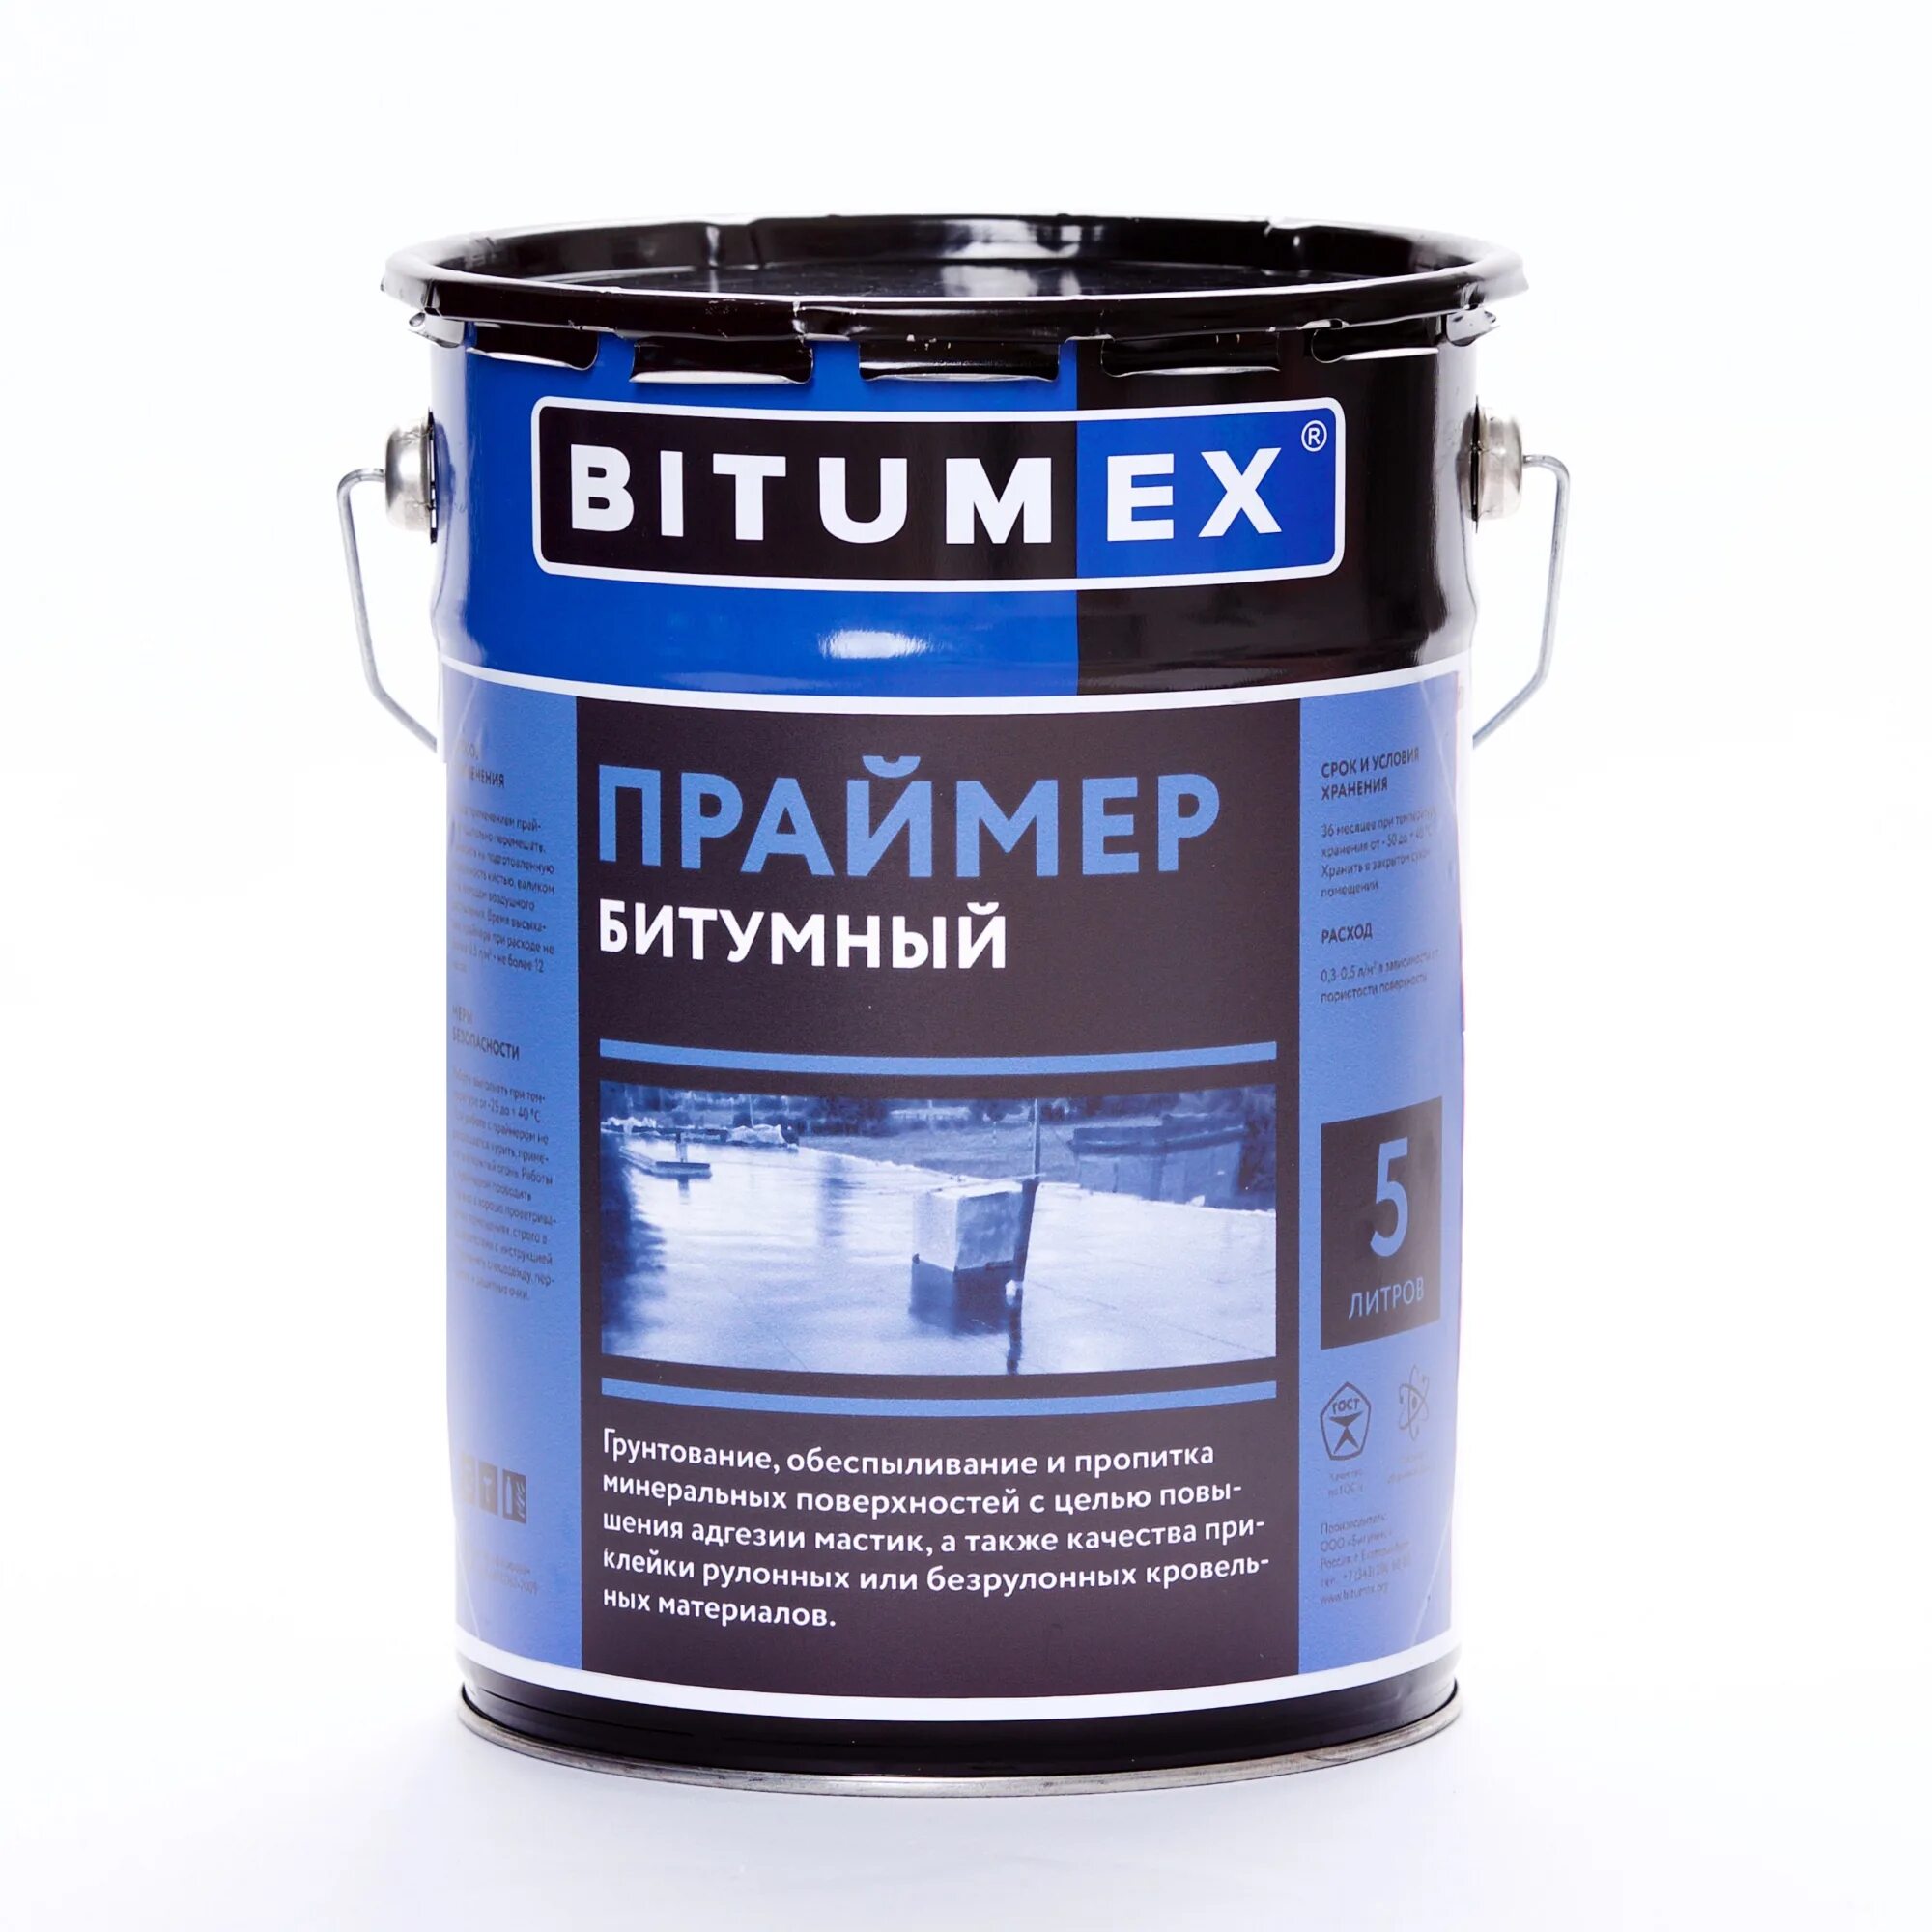 Номер праймера. Праймер BITUMEX битумный 5л. Праймер битумный BITUMEX эконом, 21,5л. Мастика битумная гидроизоляционная BITUMEX эконом, 22кг. Праймер битумный SMARTMIX 5л..